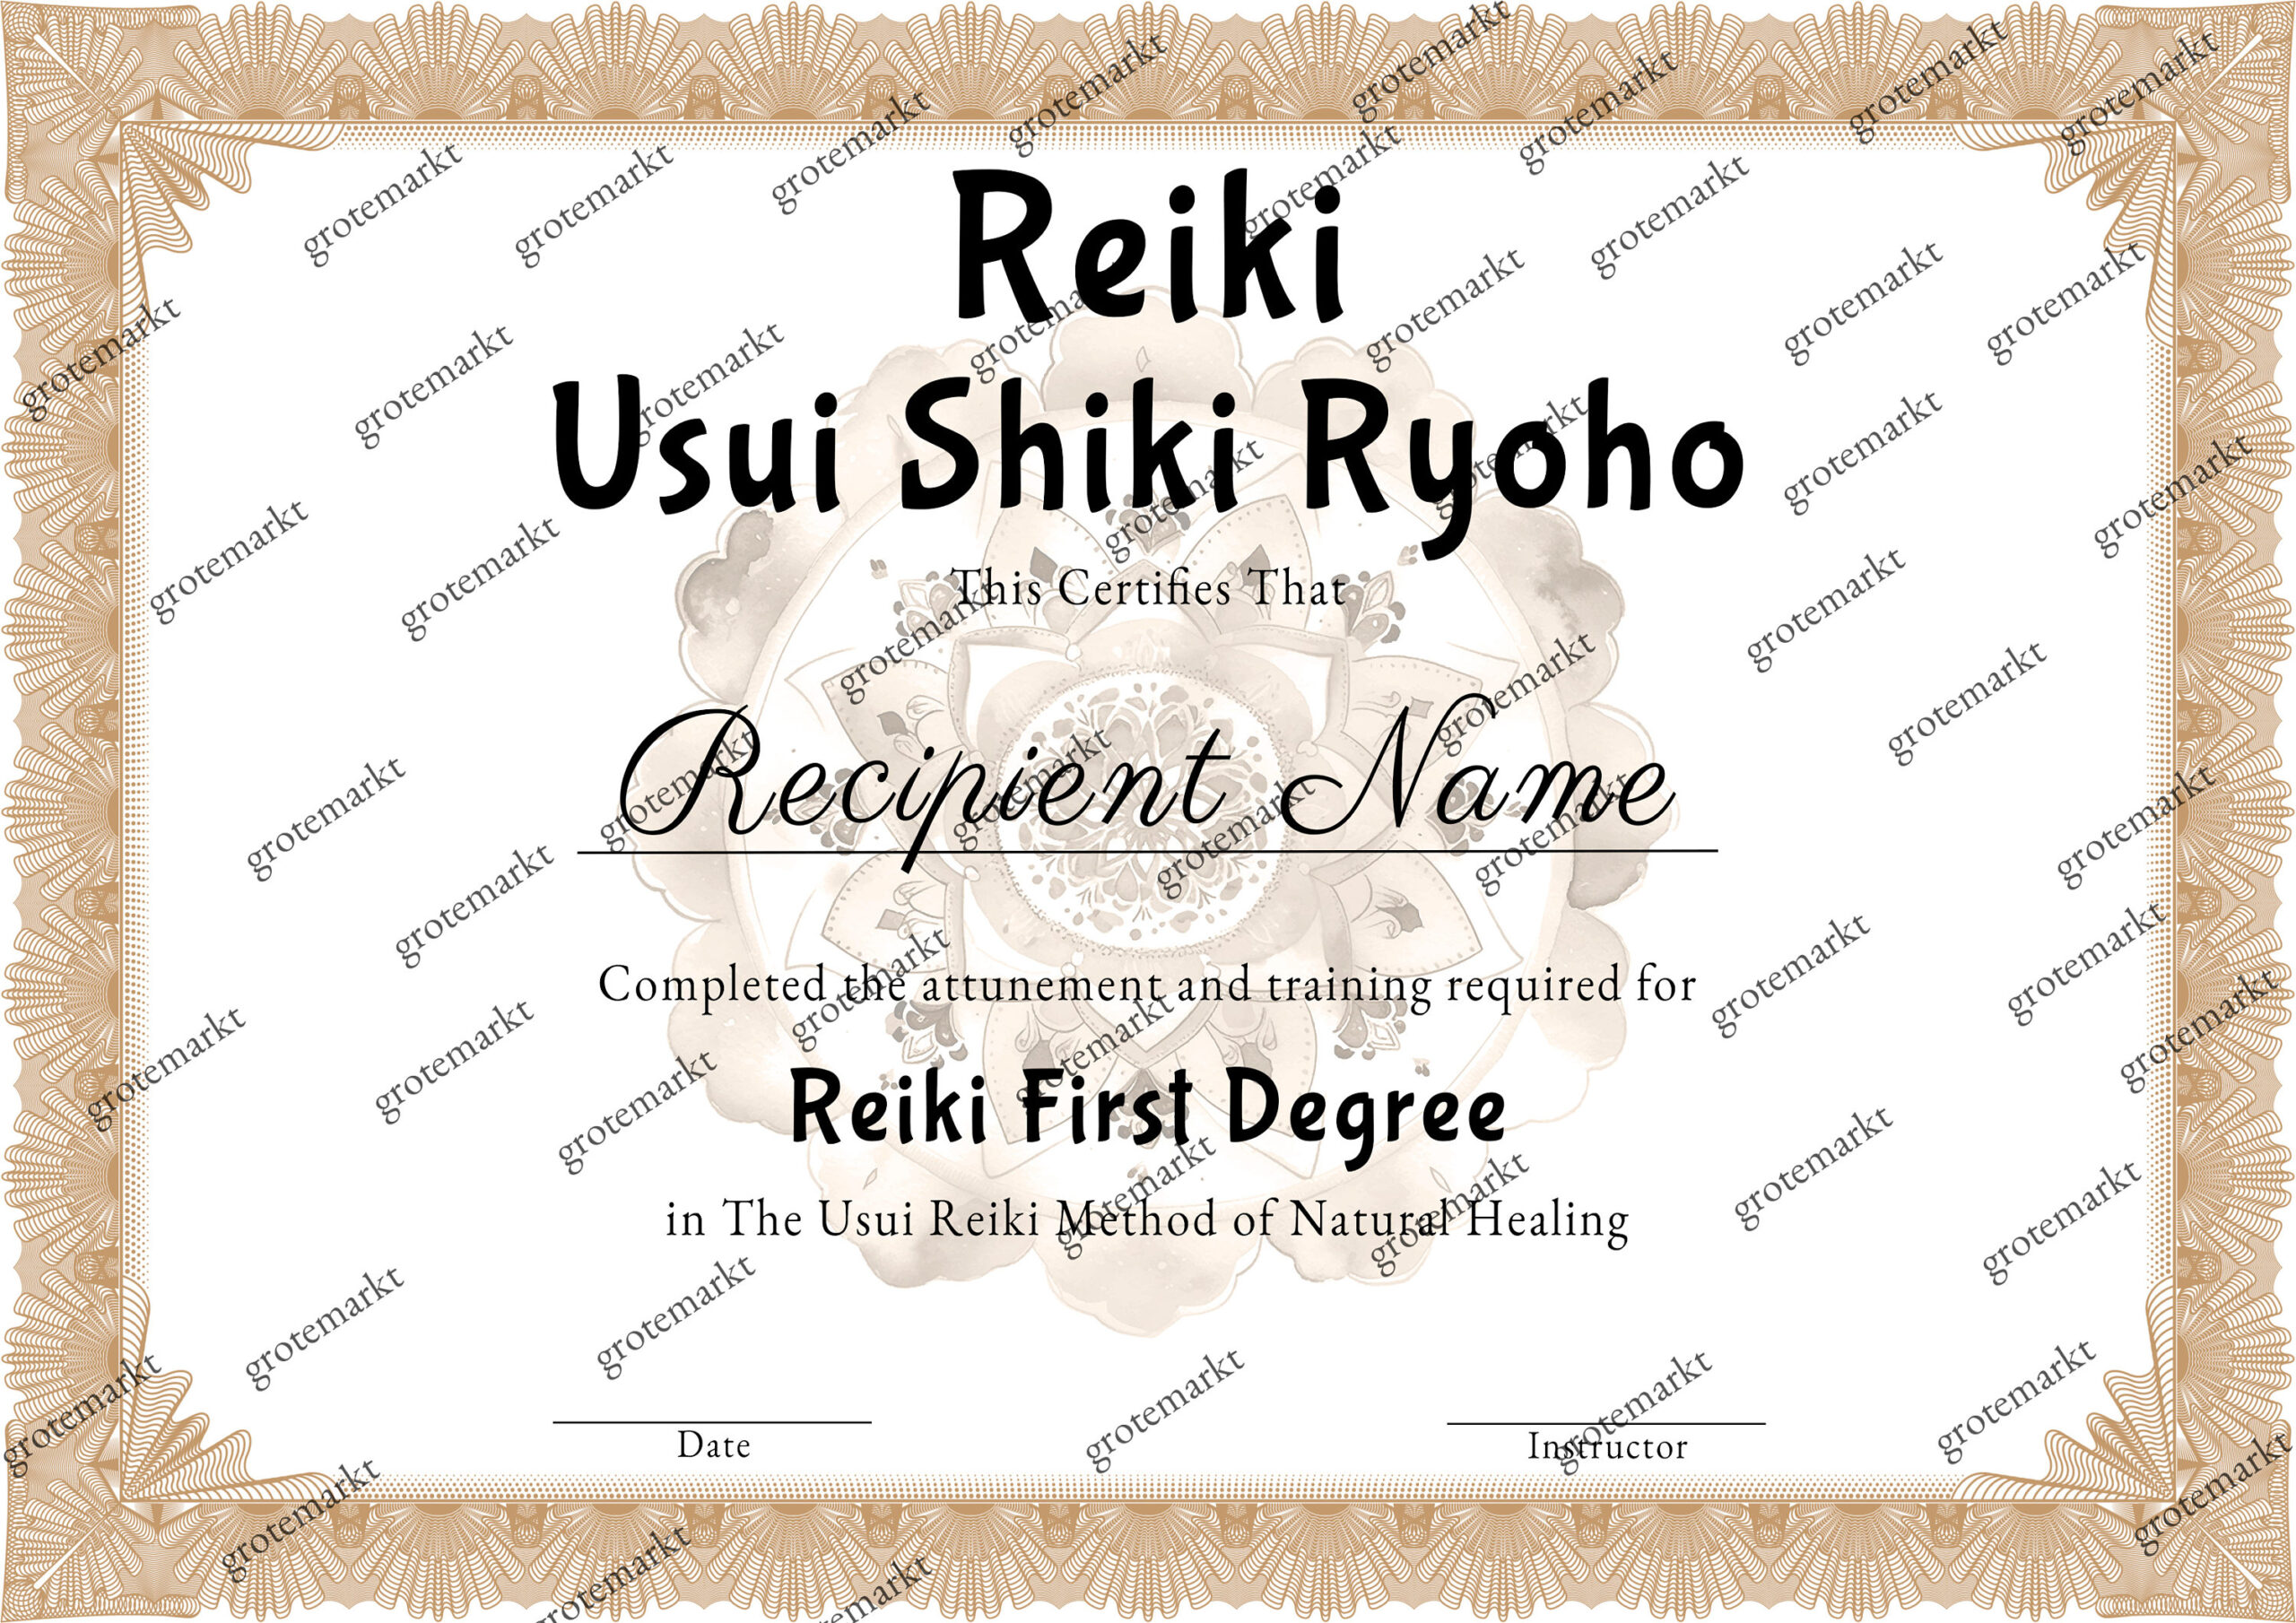 Reiki Certificates - Levels I, II, III and Master, Editable Certificate ...